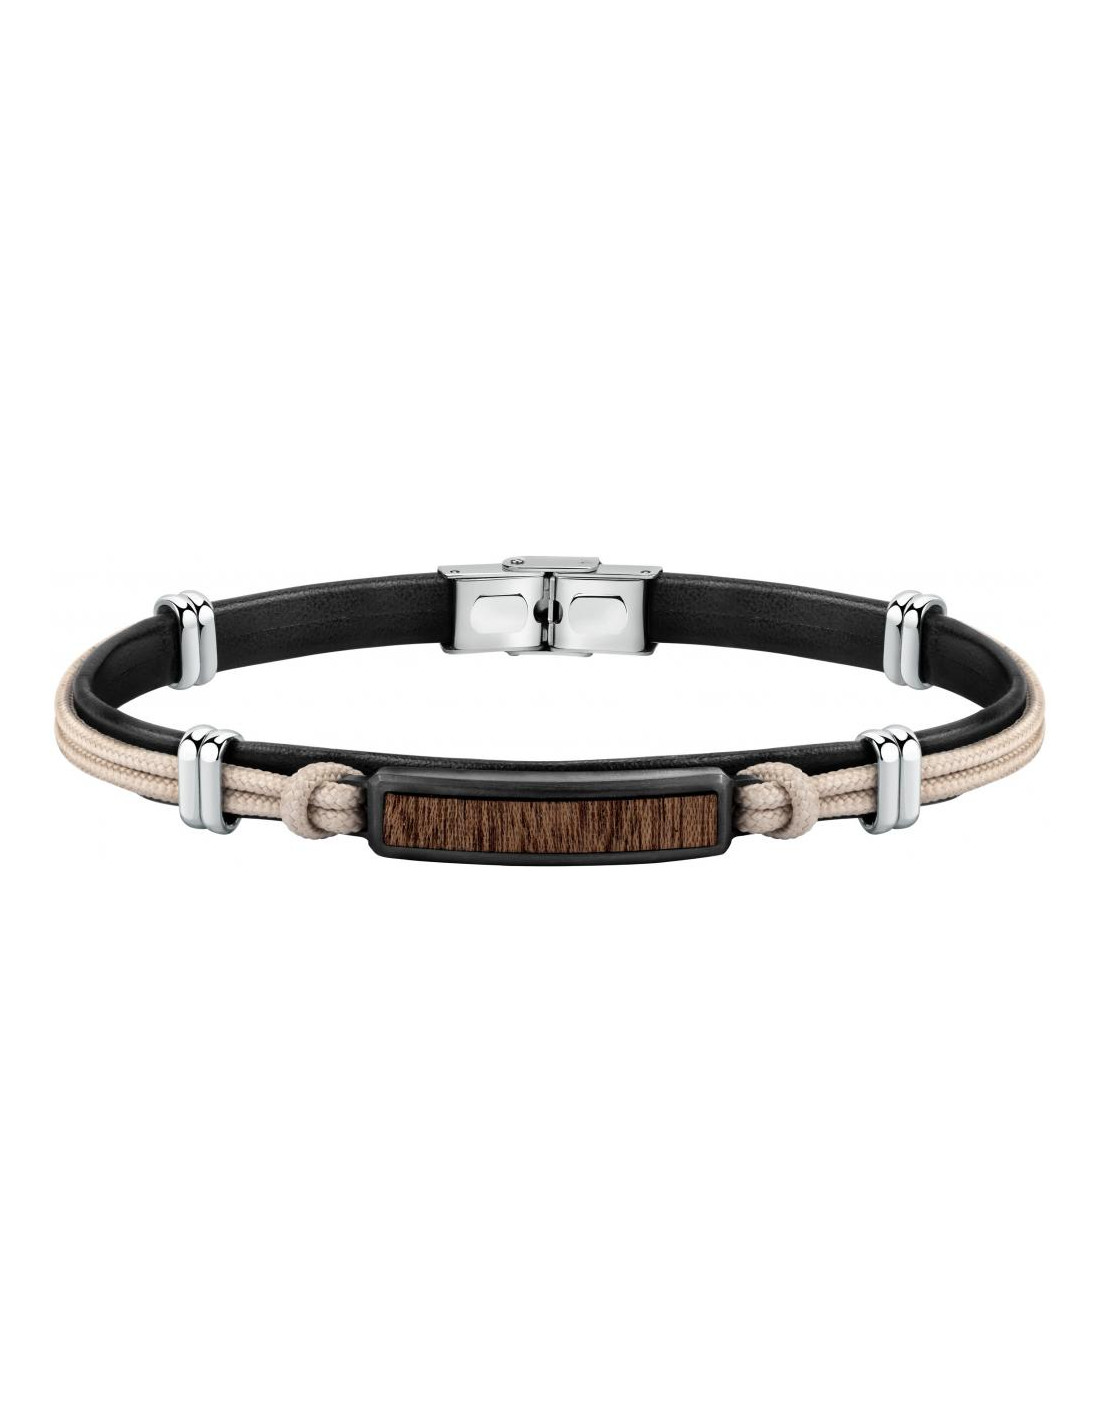 Jewelry: Sector Bandy SZV80 men's steel and black leather bracelet